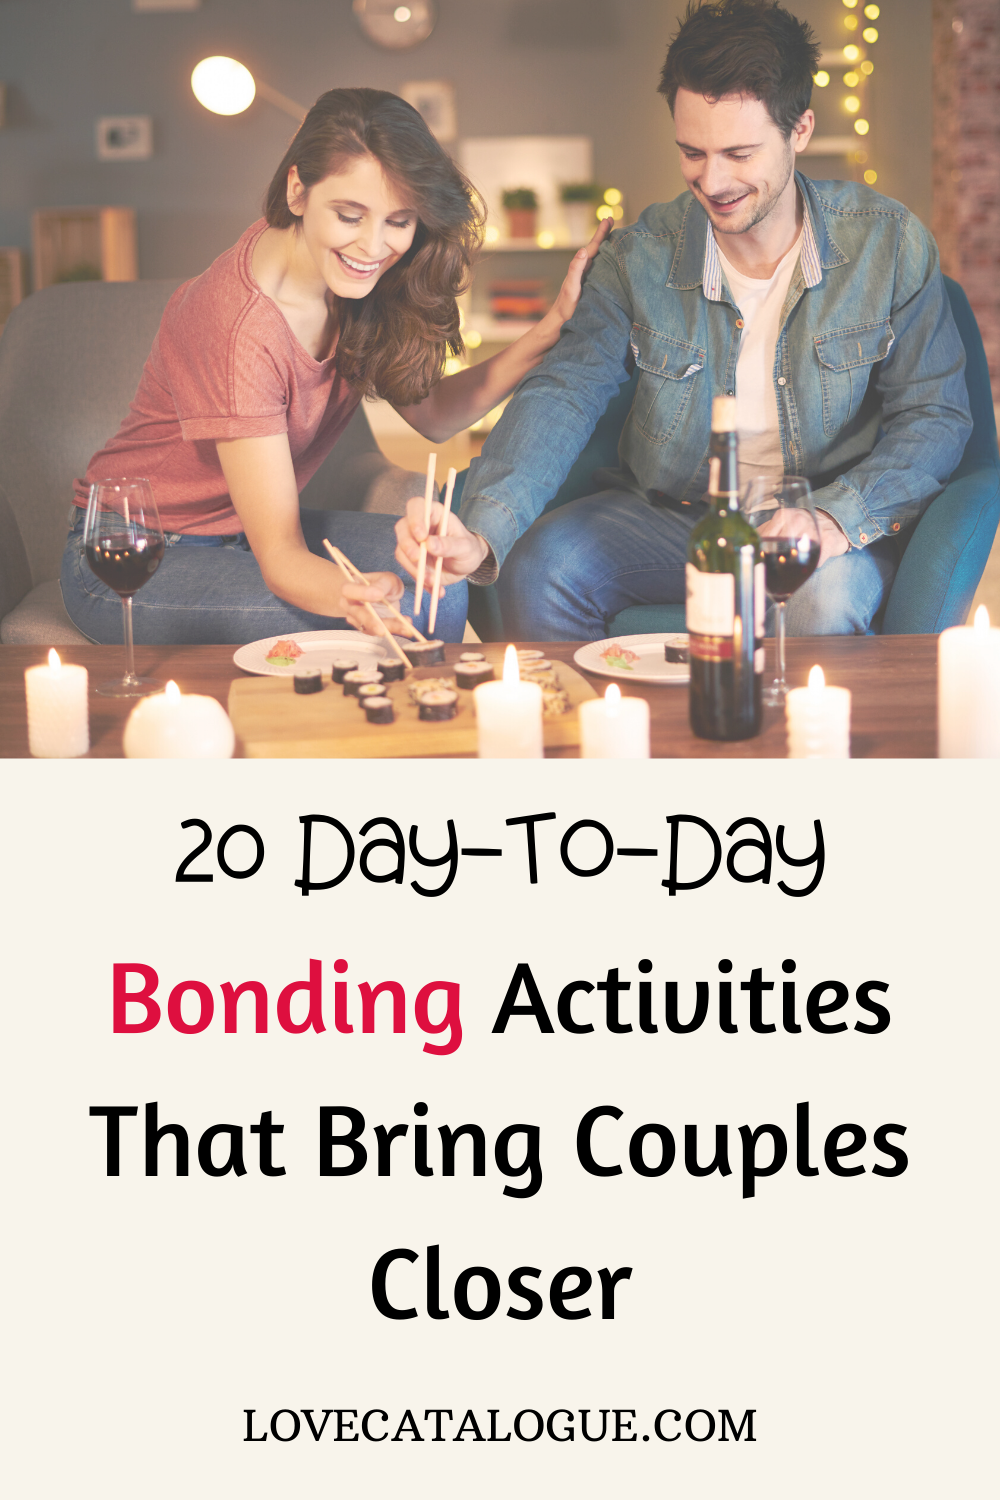 Bonding activities for couples